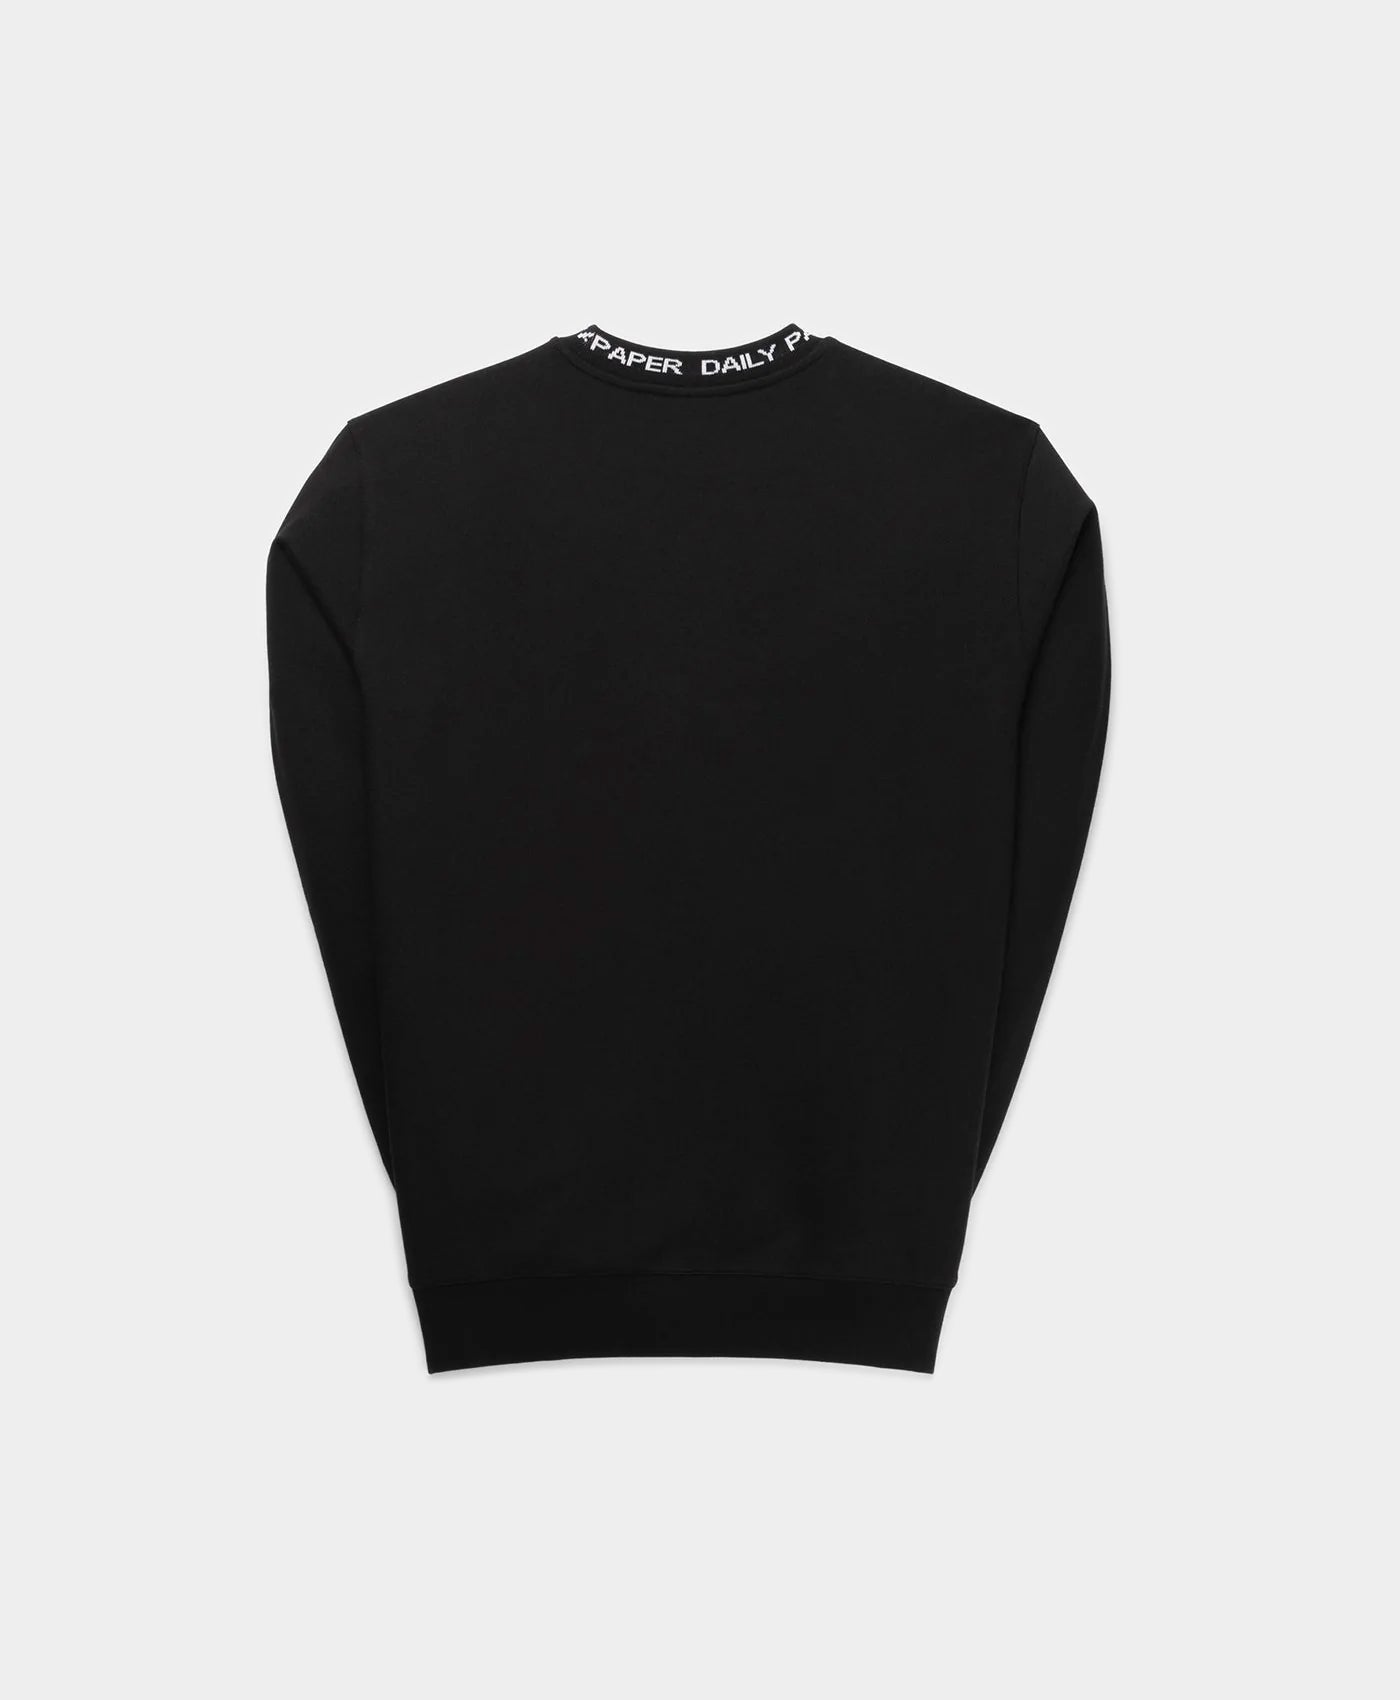 DP - Black Erib Sweater - Packshot - Rear